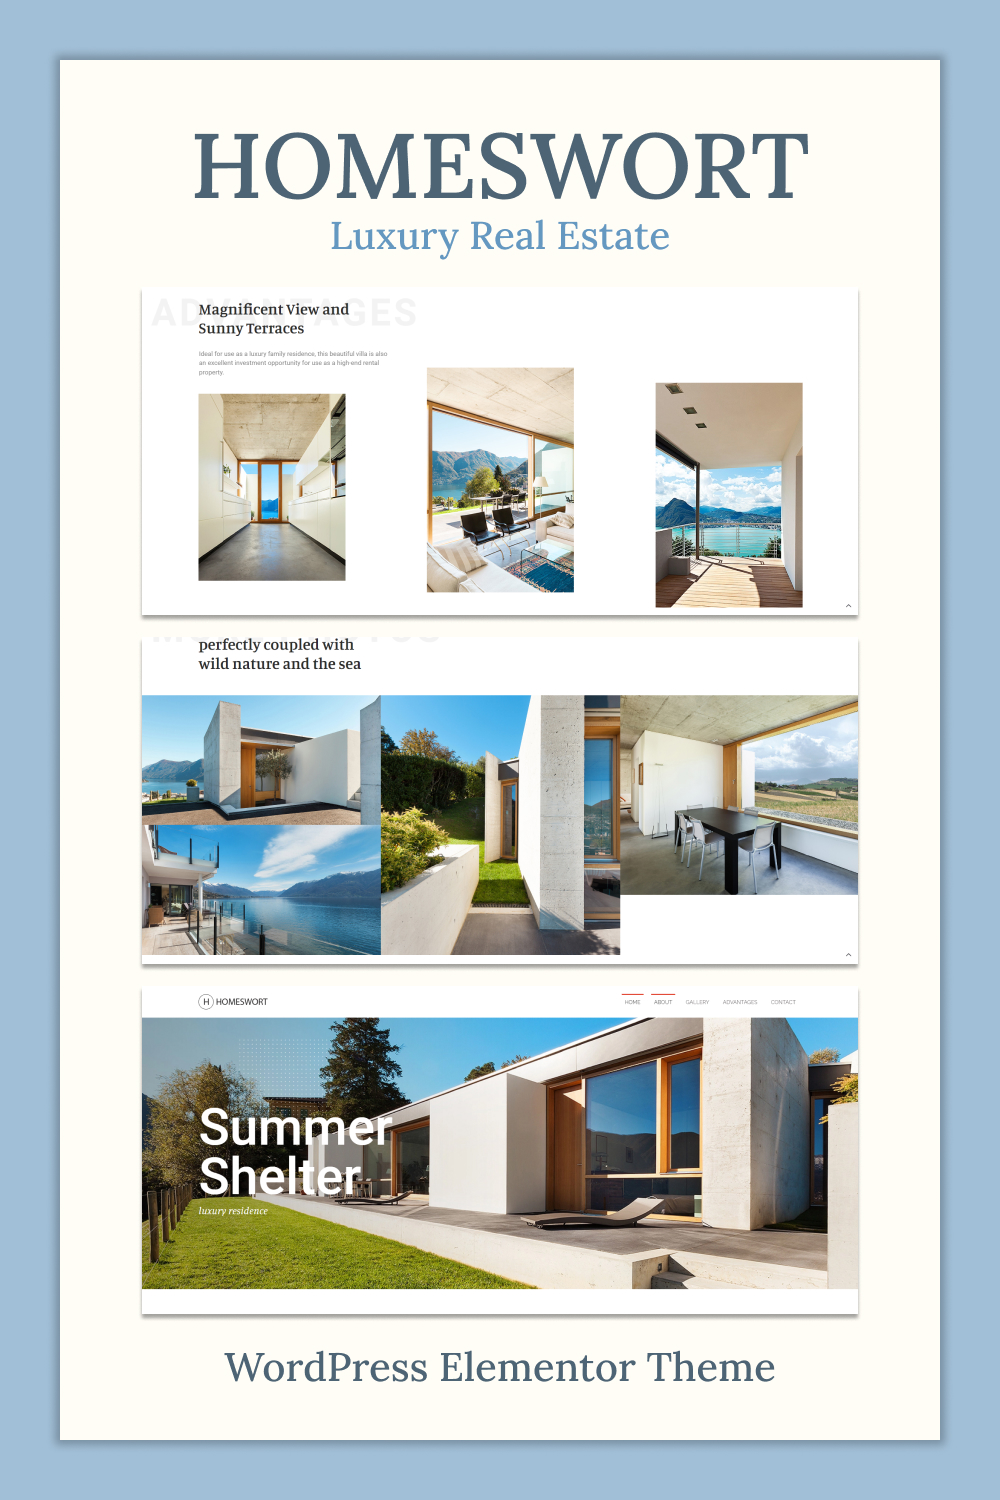 Pinterest illustrations of homeswort luxury real estate wordpress elementor theme.